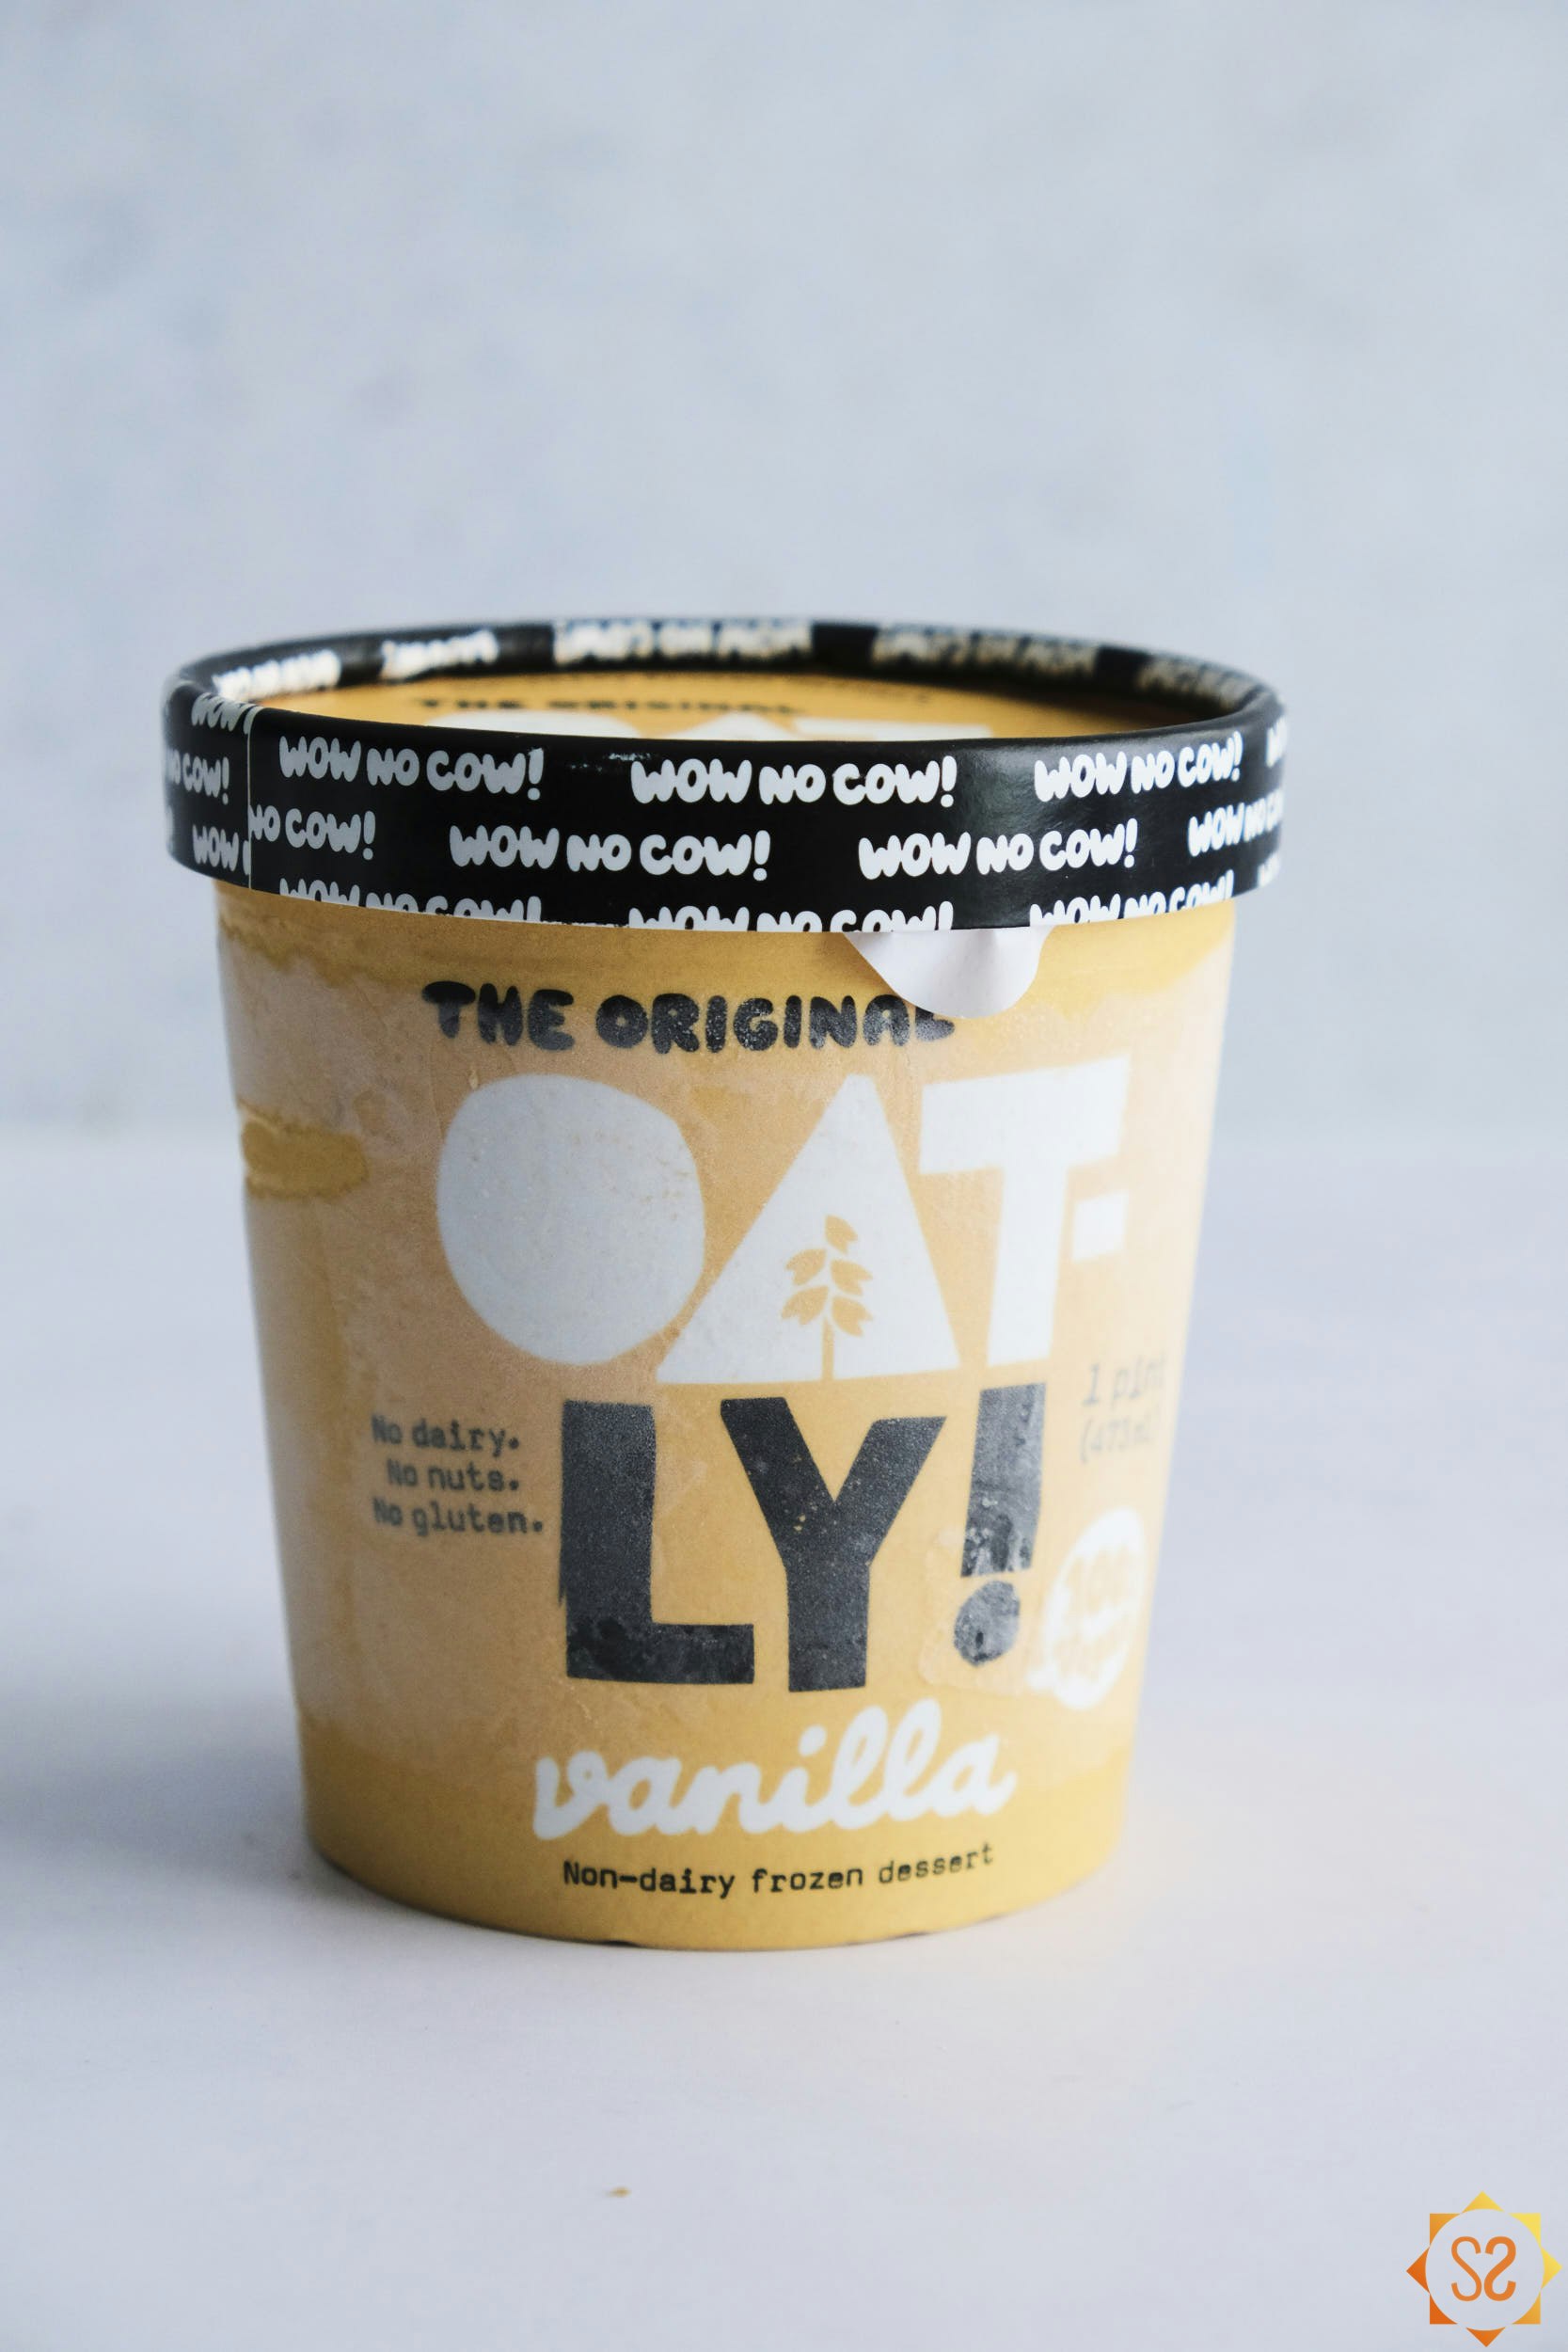 Oatly Vanilla Non-Dairy Frozen Dessert Package